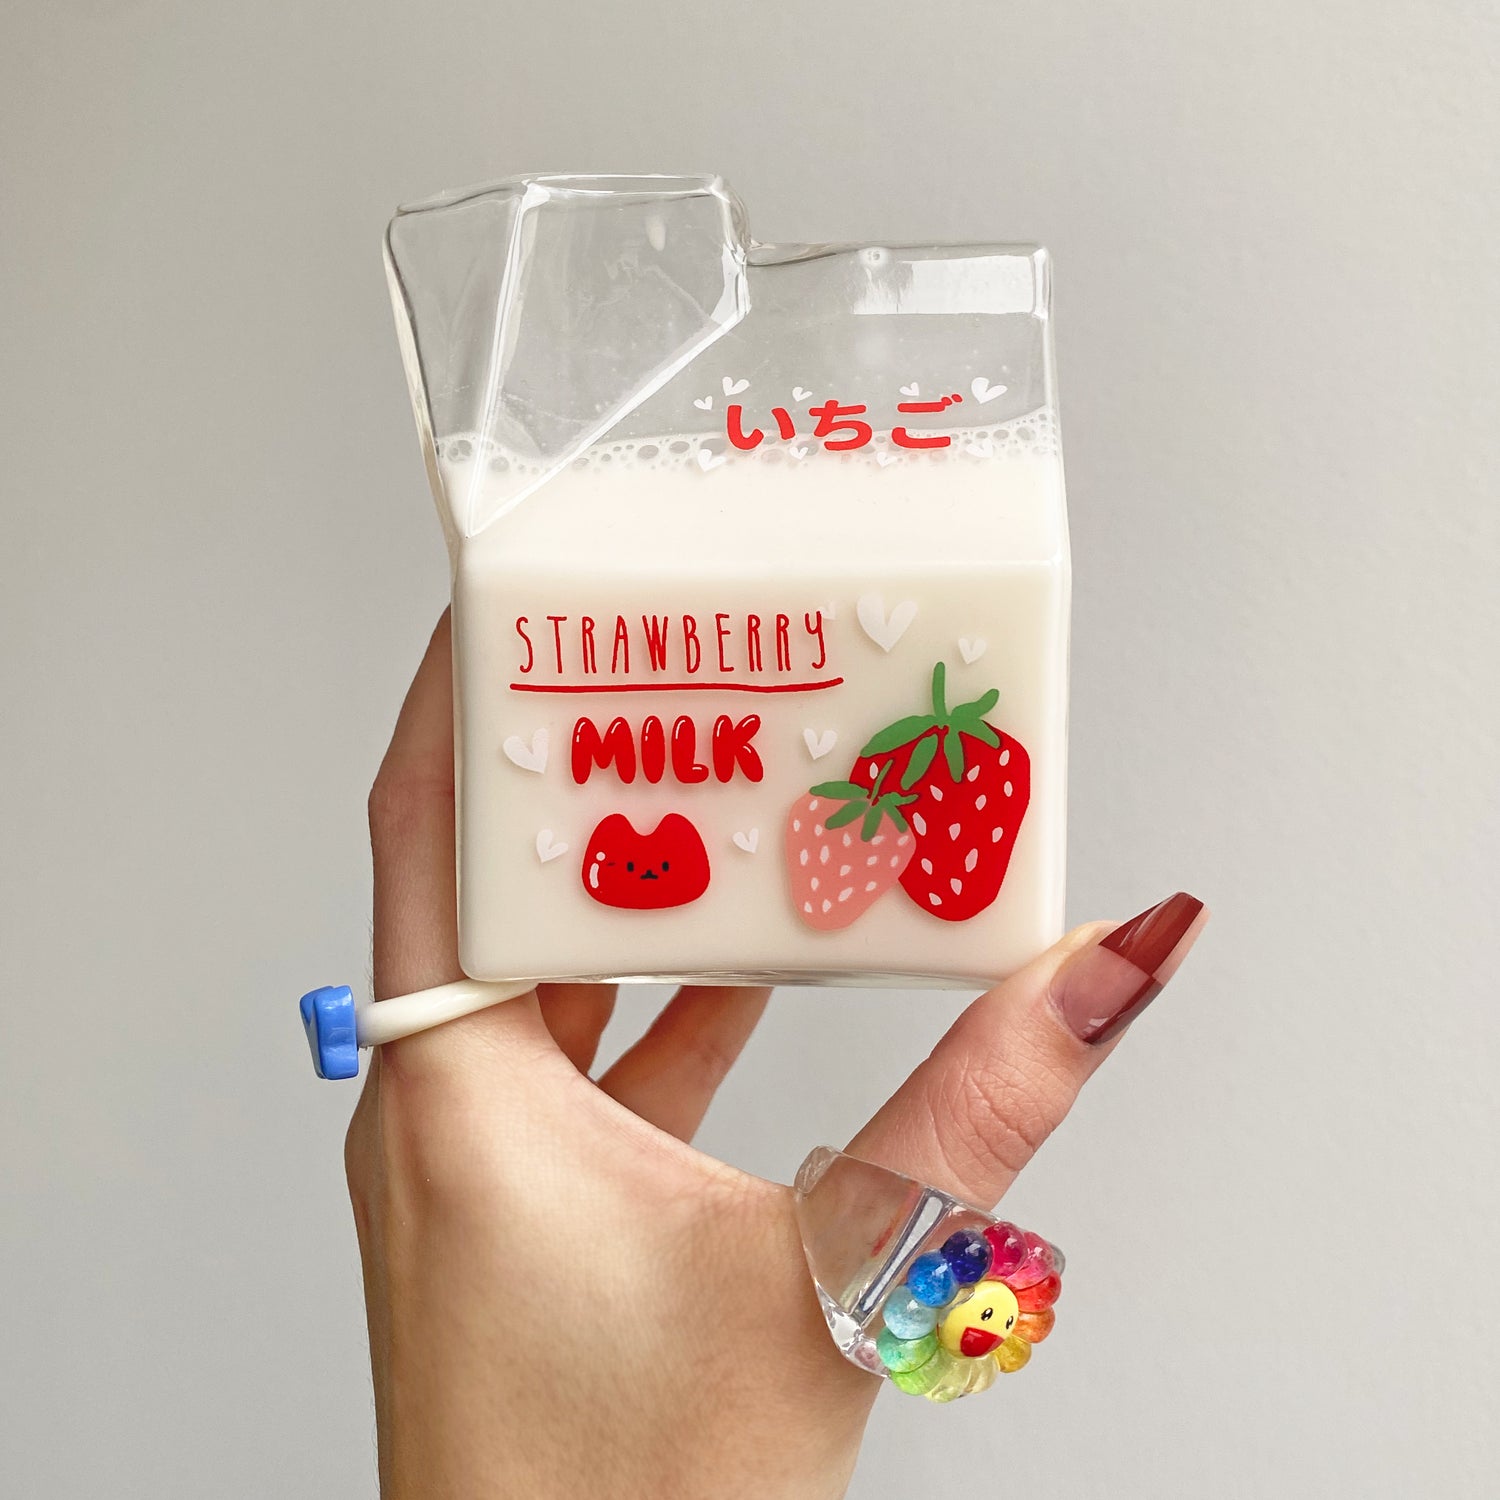 glass milk carton with cute strawberry design